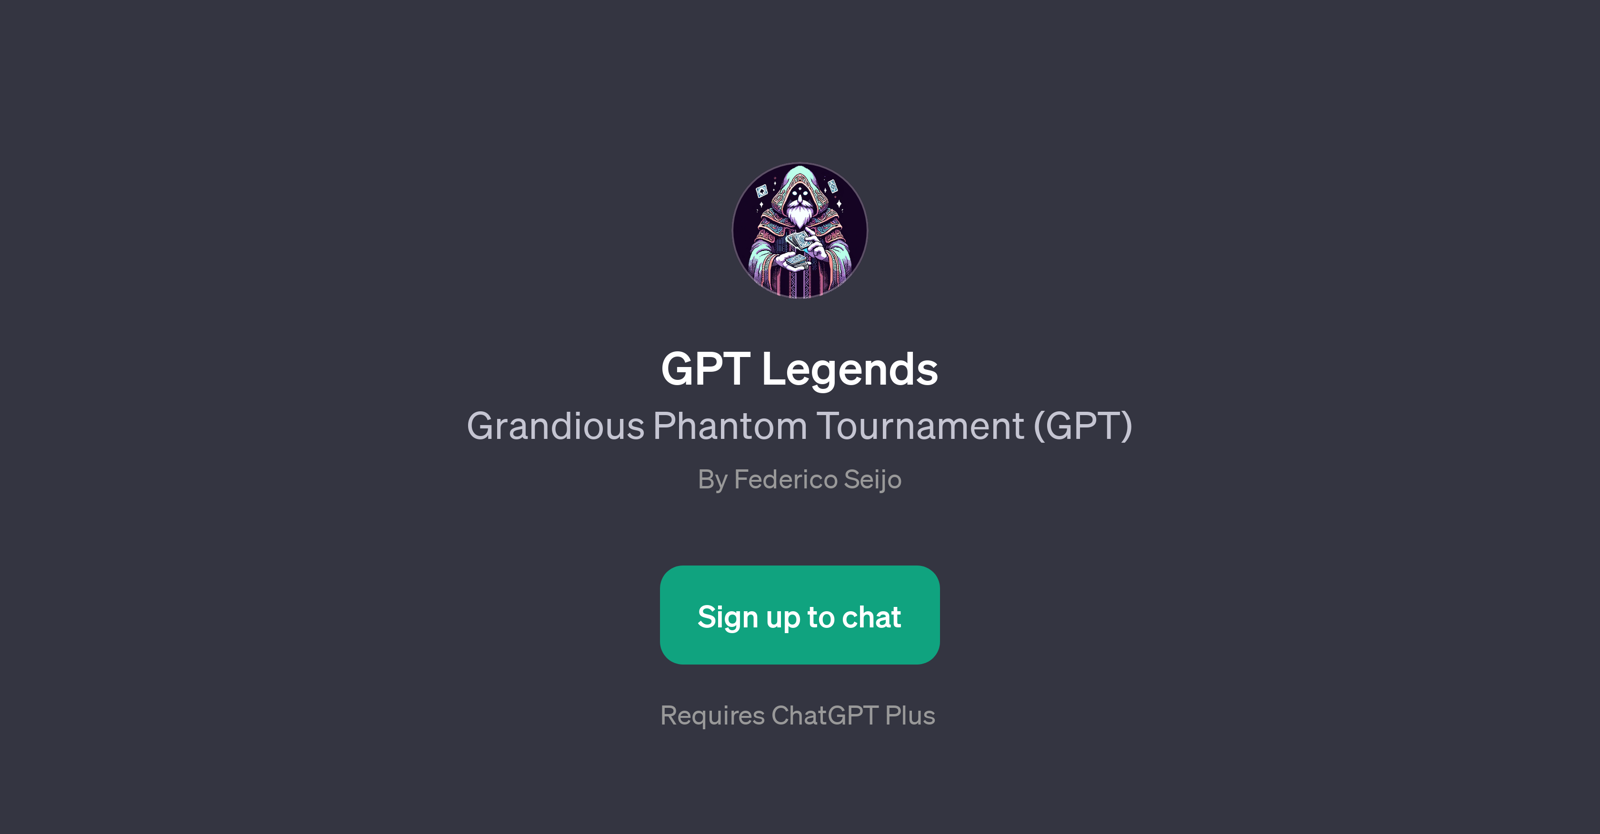 GPT Legends website